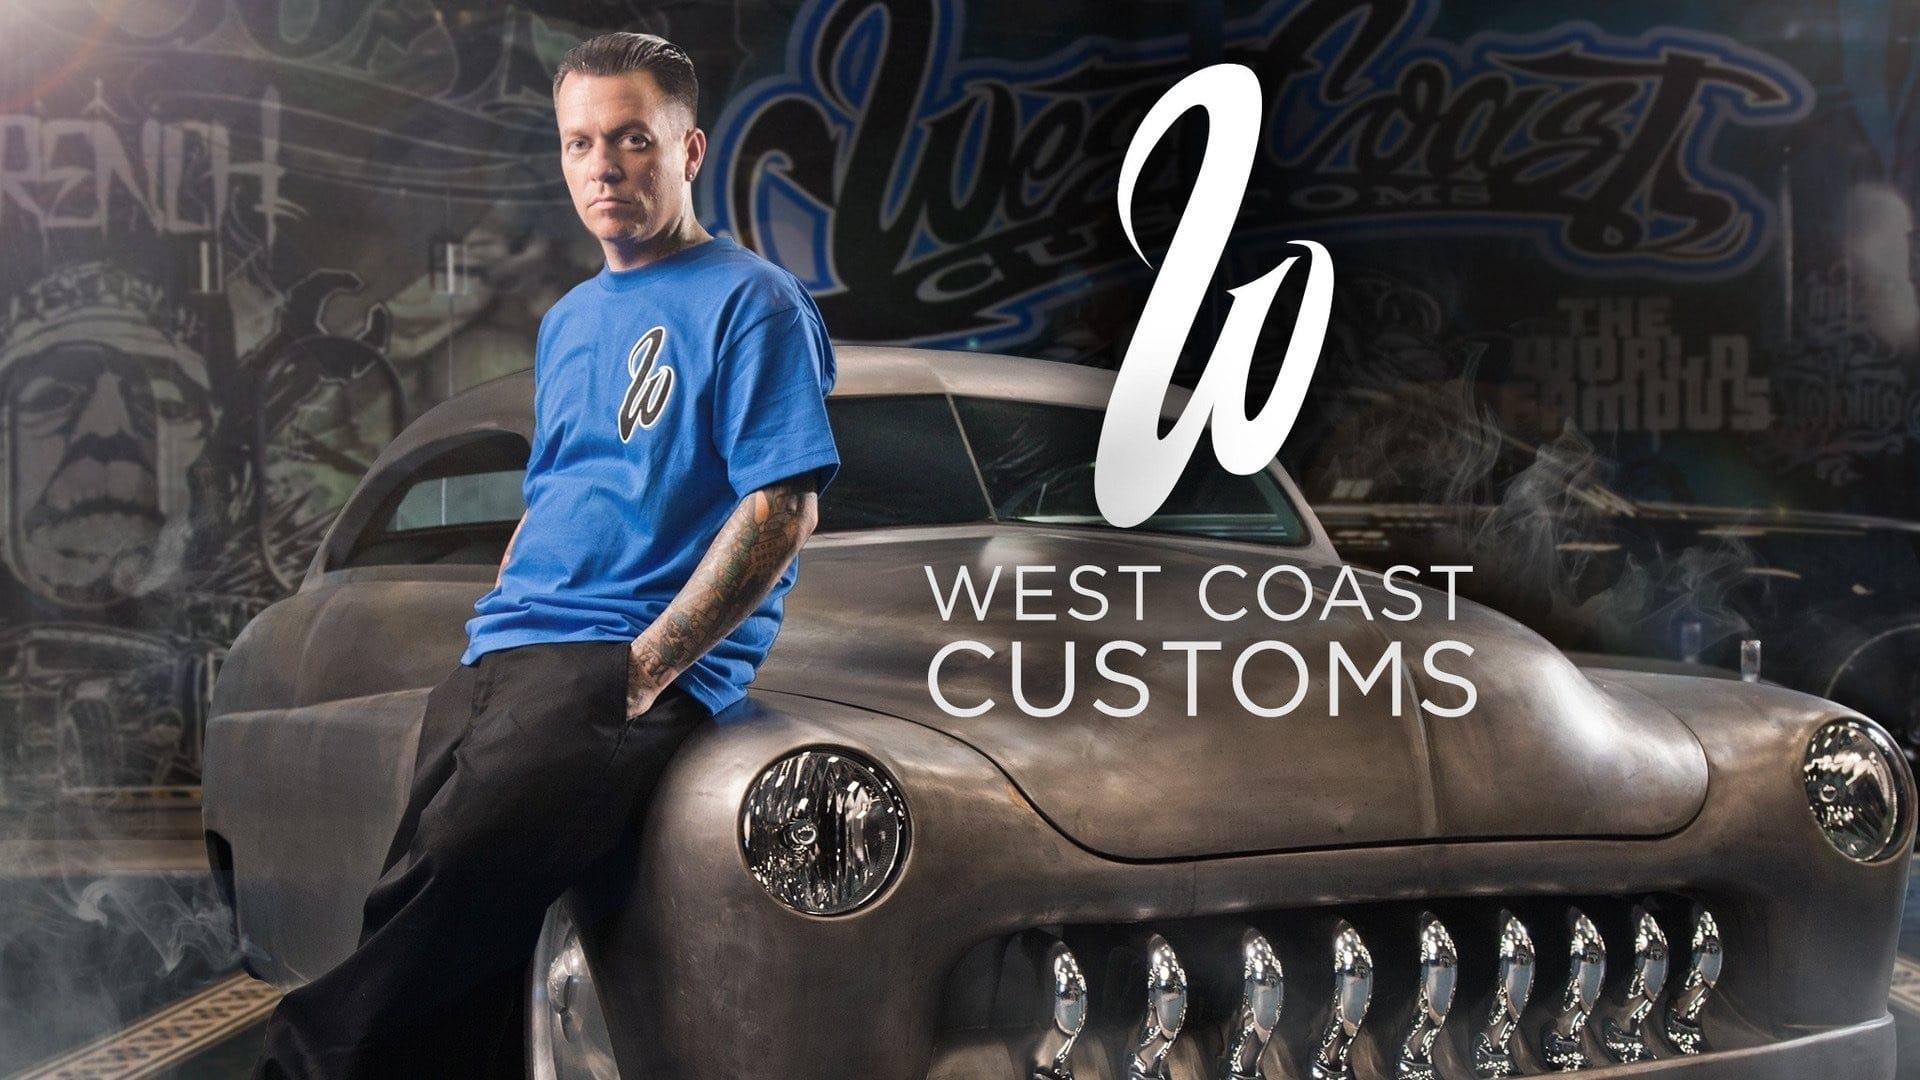 West Coast Customs backdrop